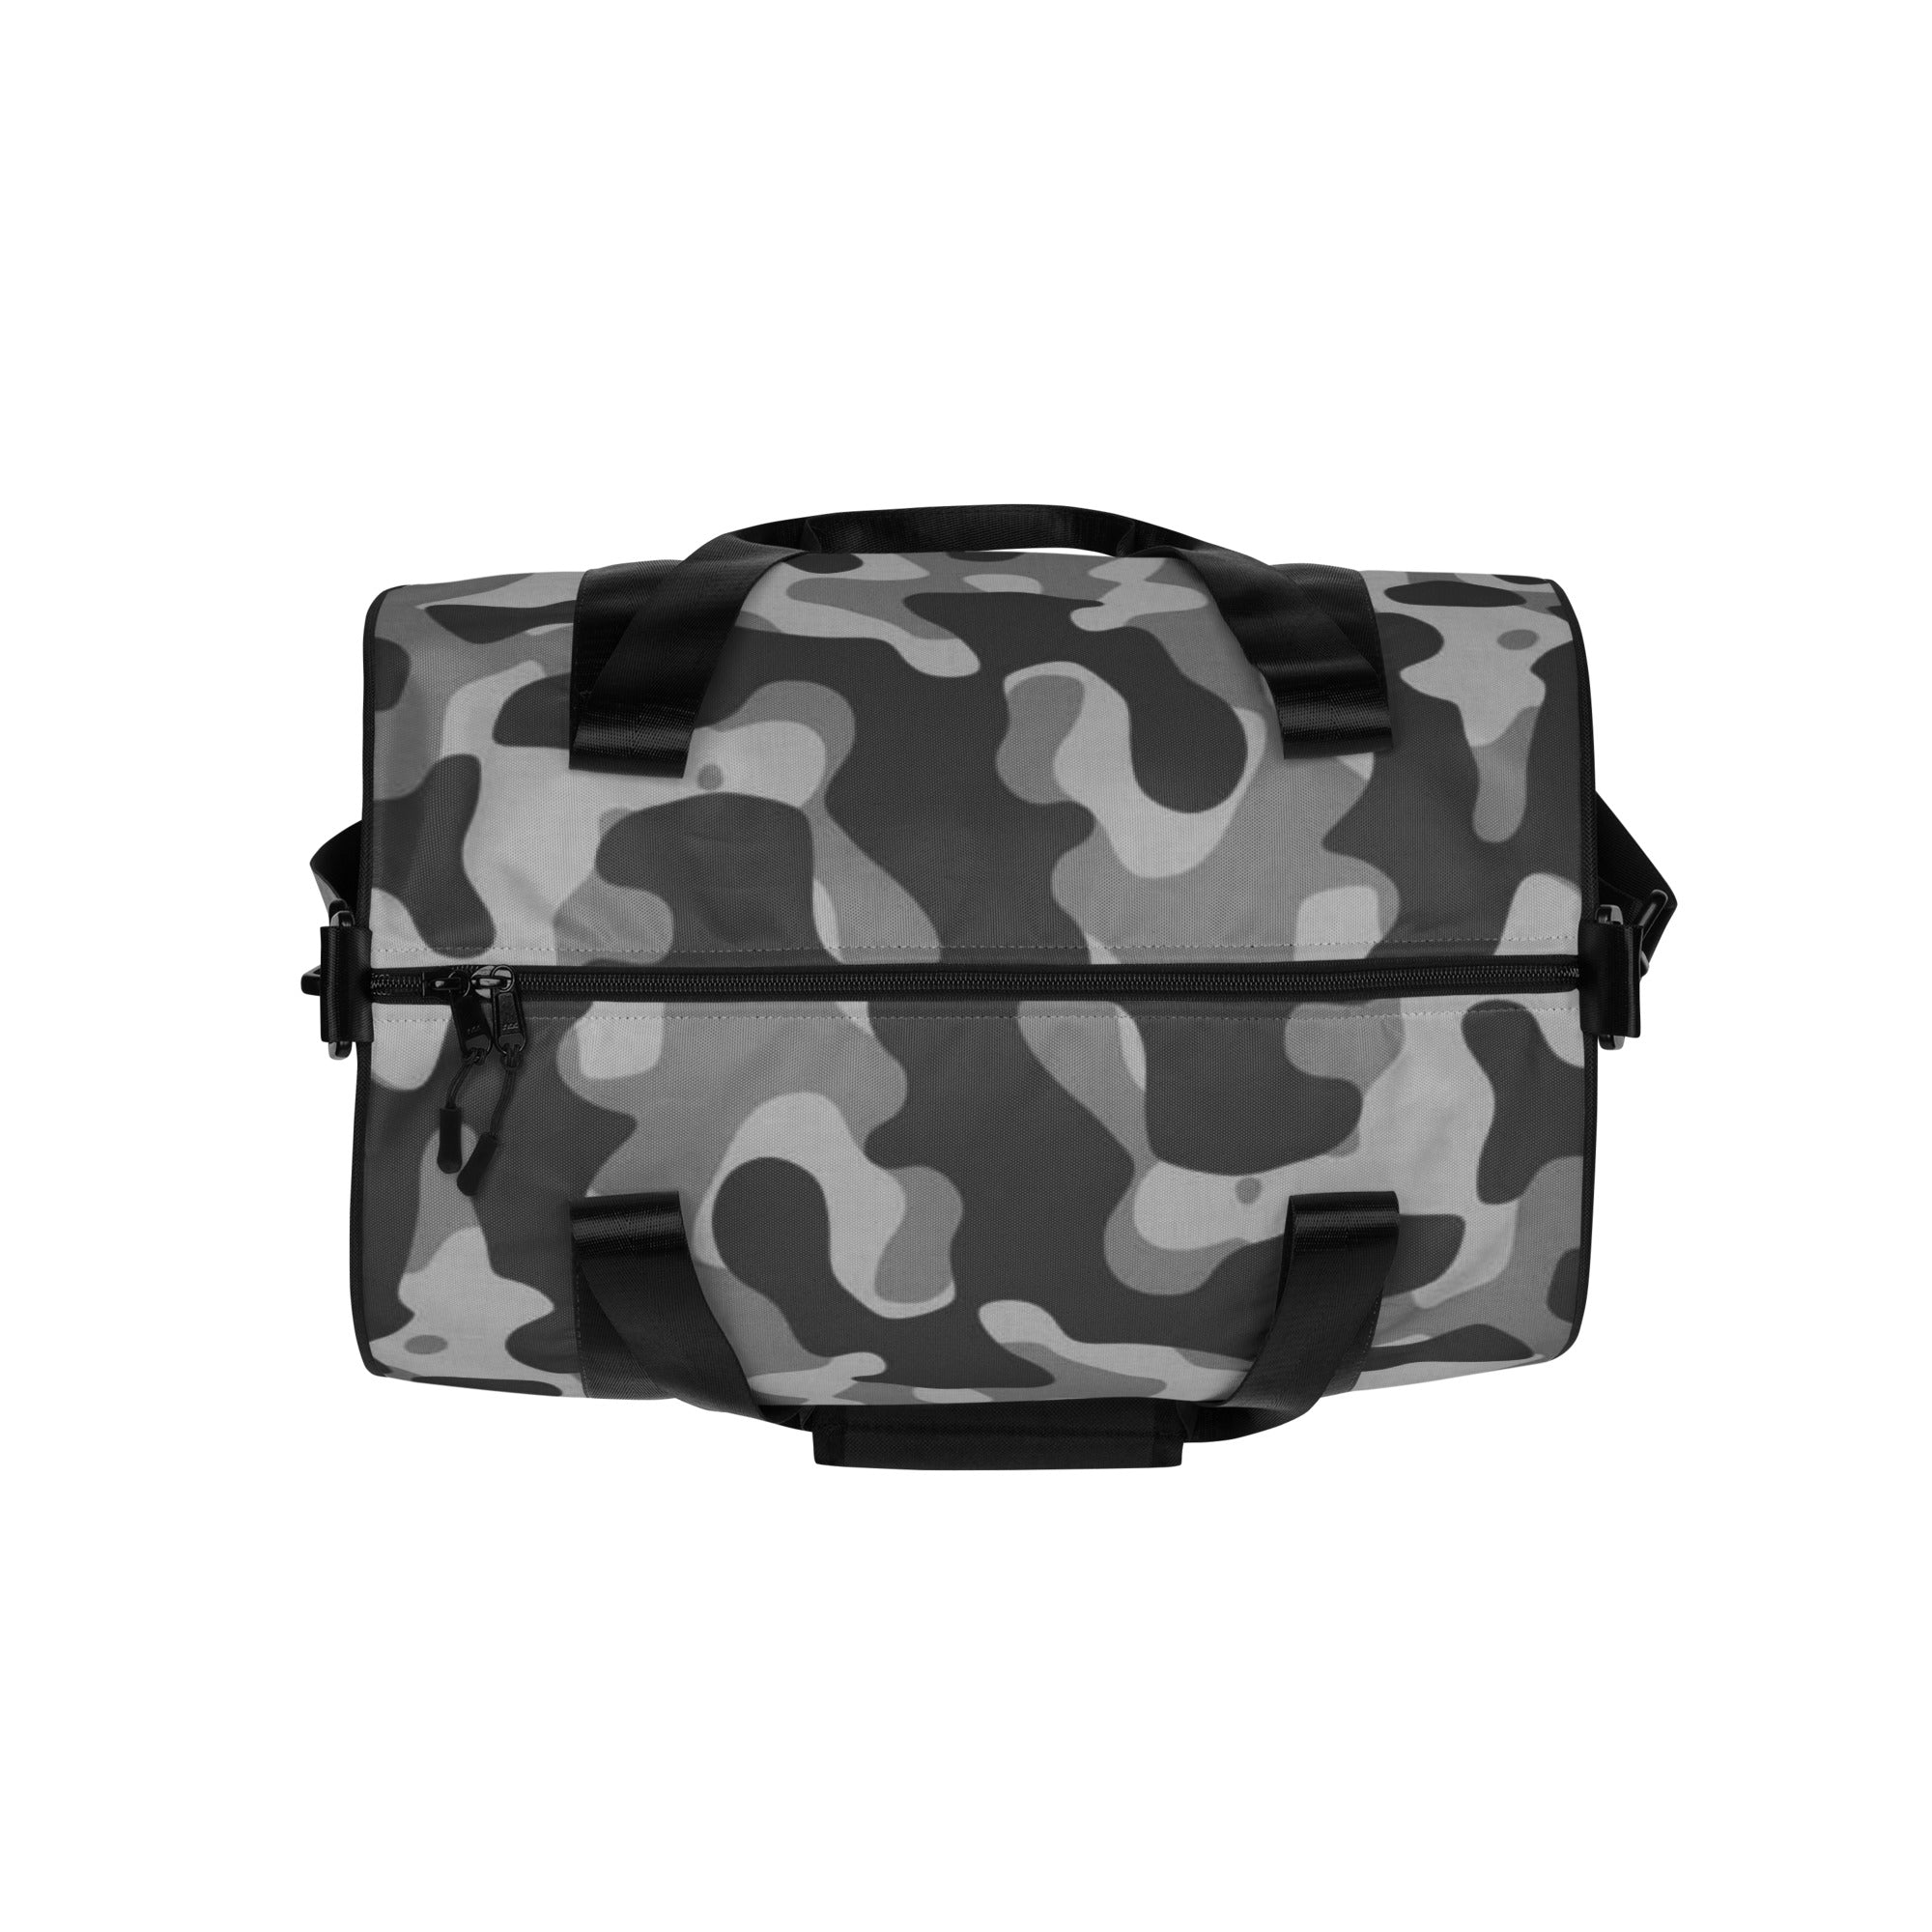 Monochrome Camouflage Gym Bag